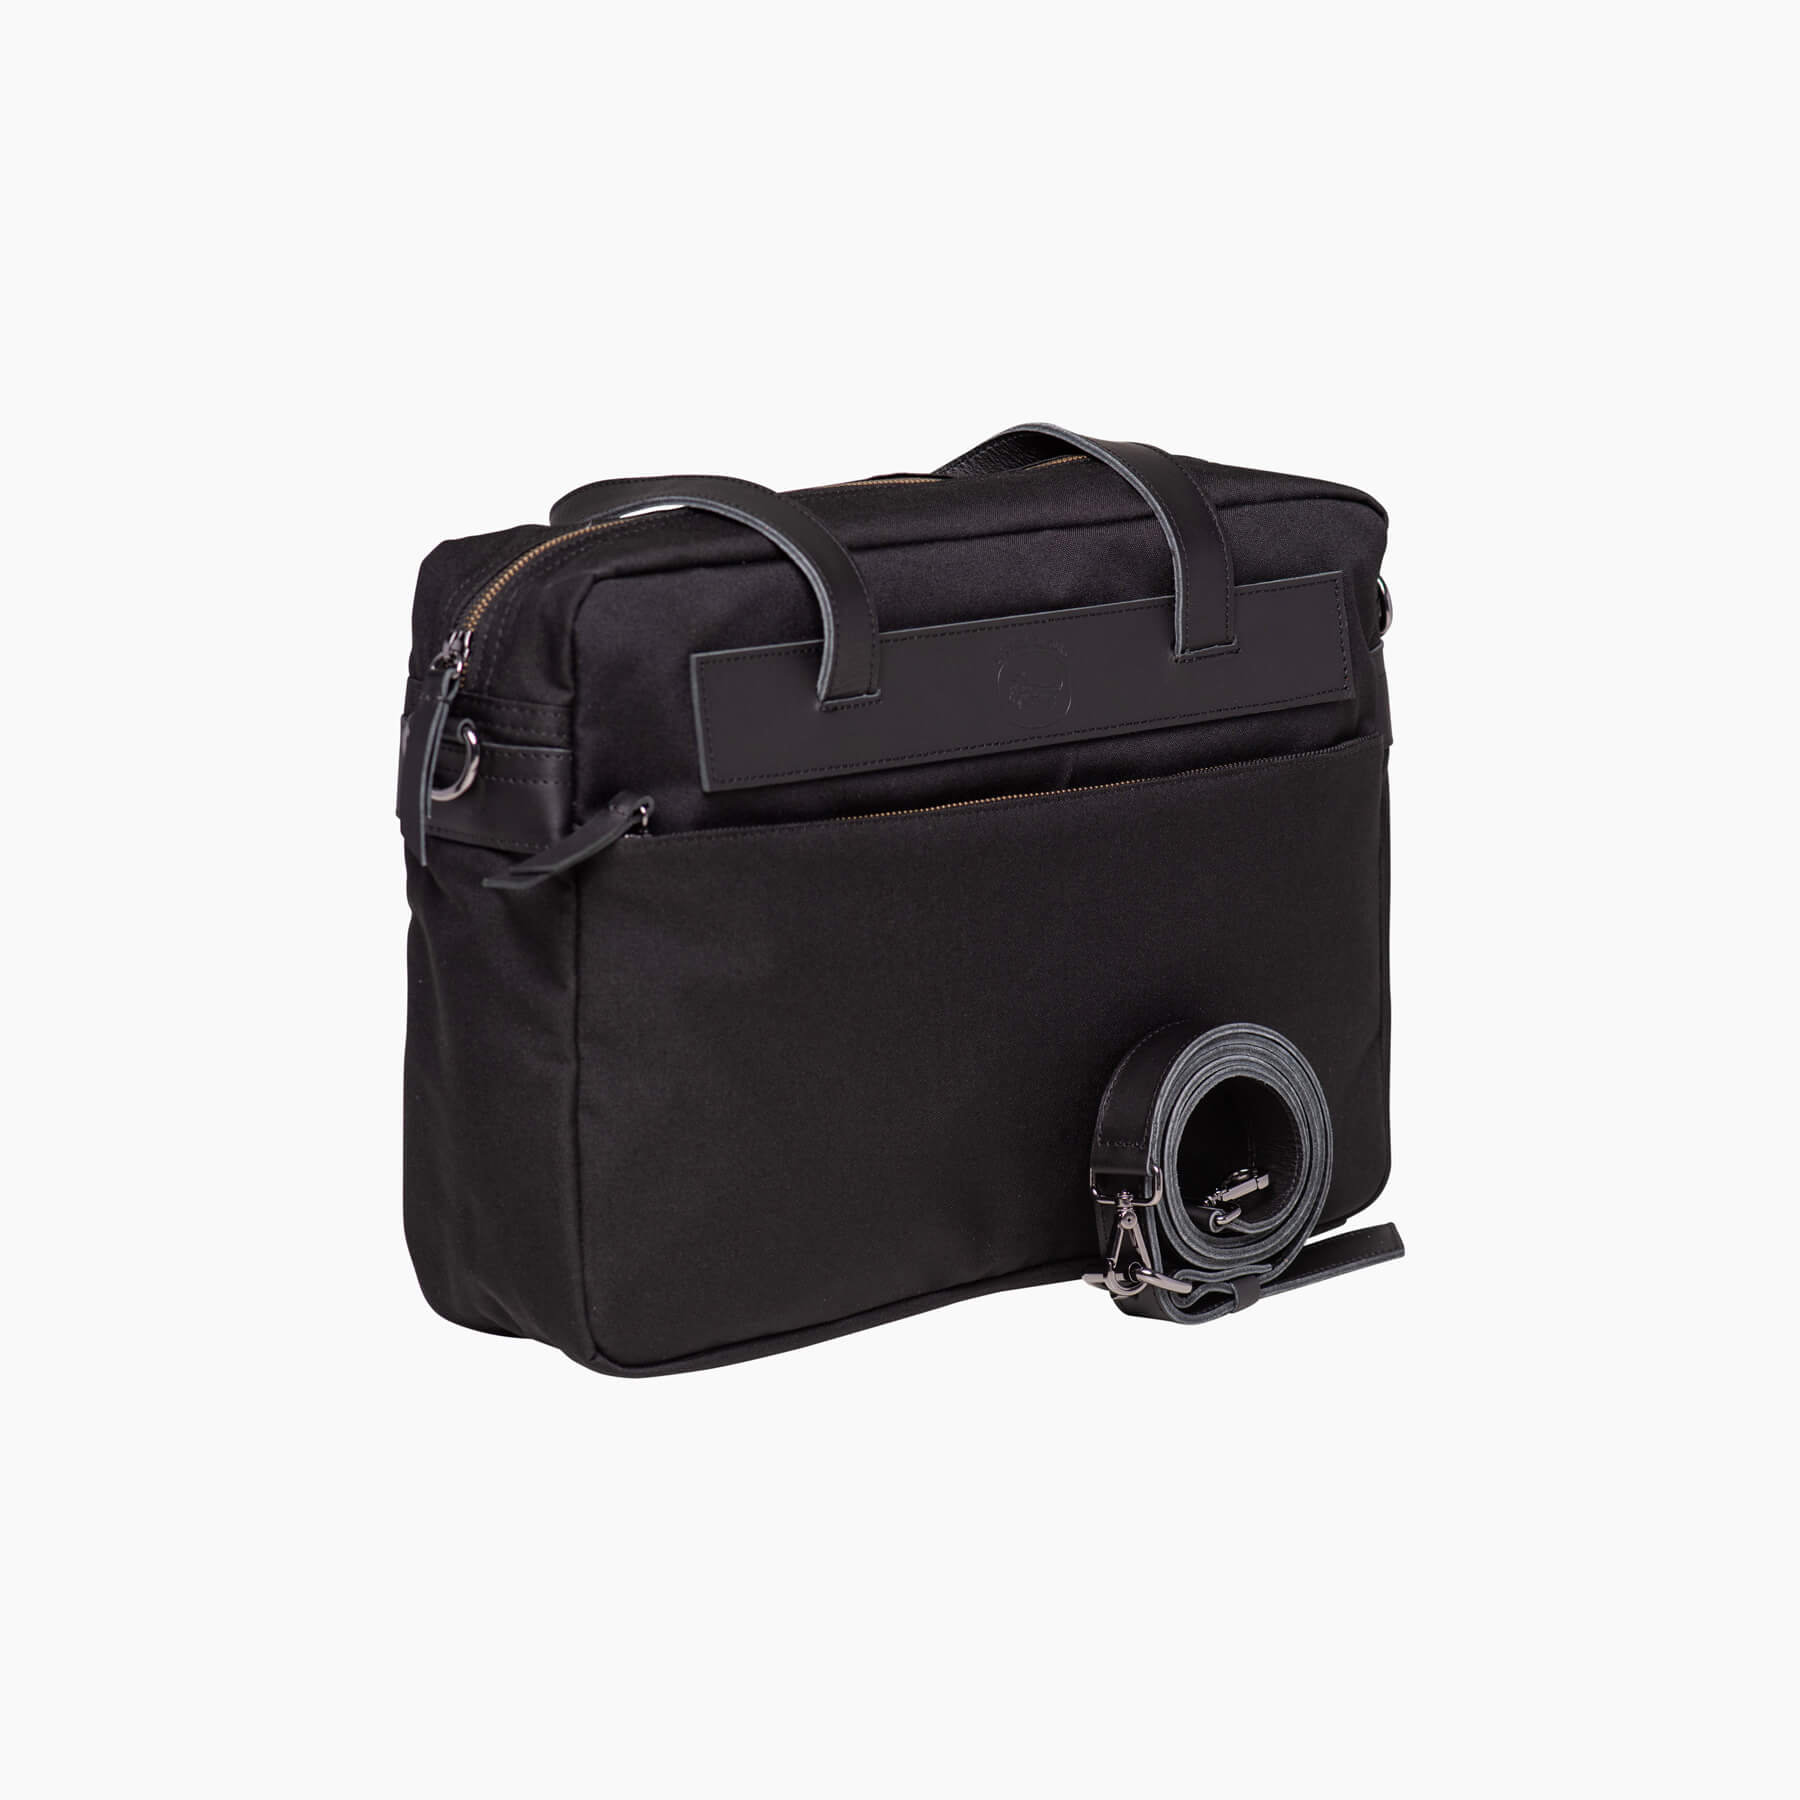 Beatnik & Sons Leather handbags the Chet briefcase